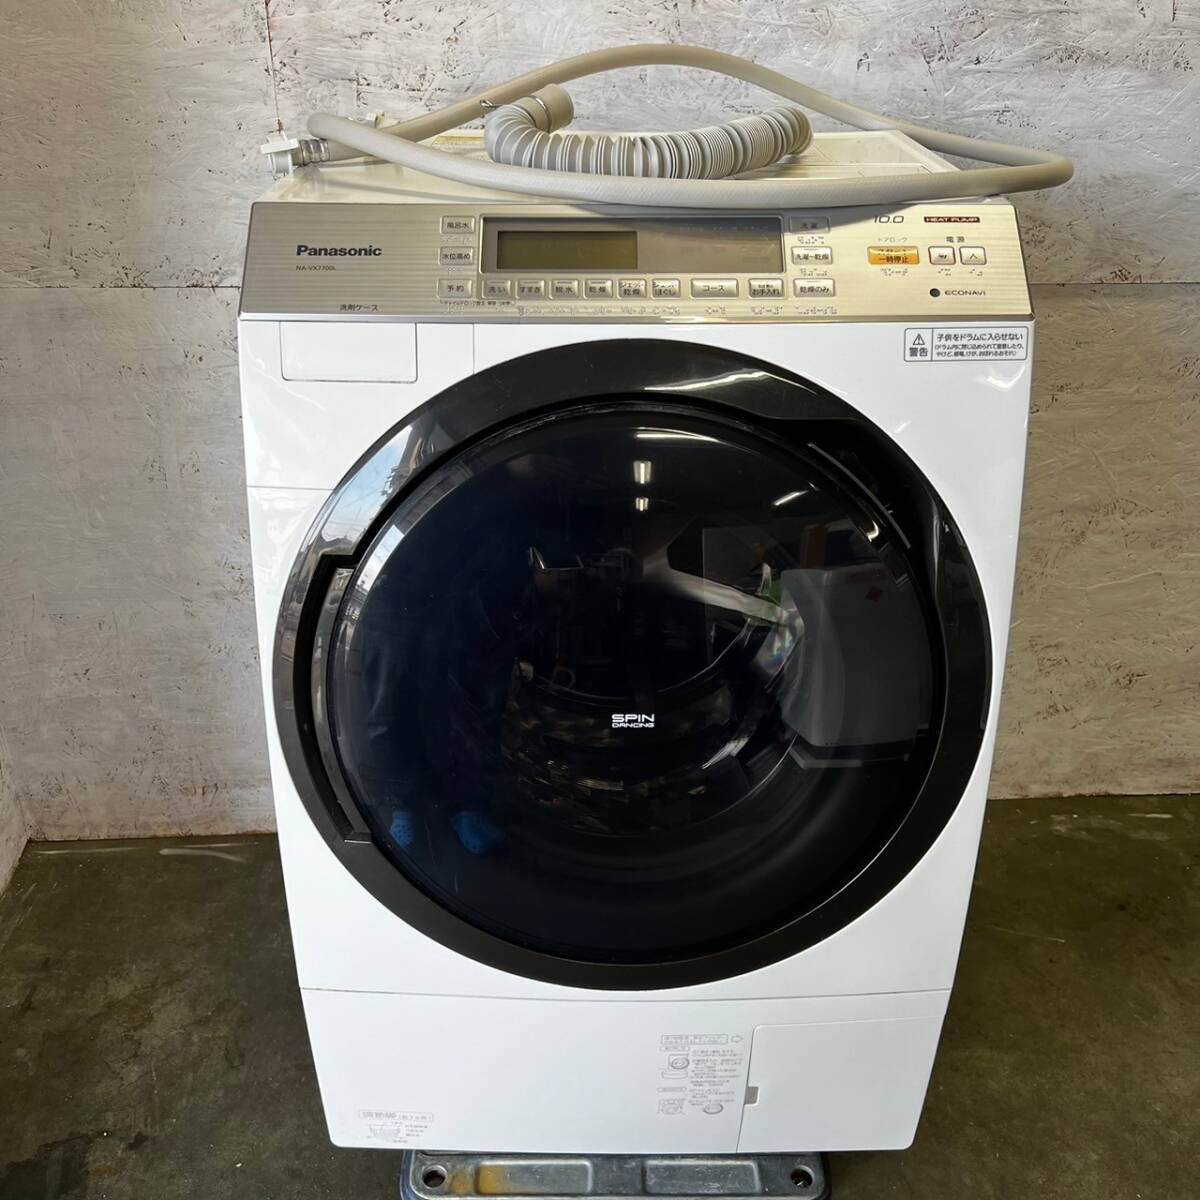 【Panasonic】 パナソニック ドラム式洗濯乾燥機 洗濯10kg 乾燥6kg NA-VX7700L 2017年製の画像1